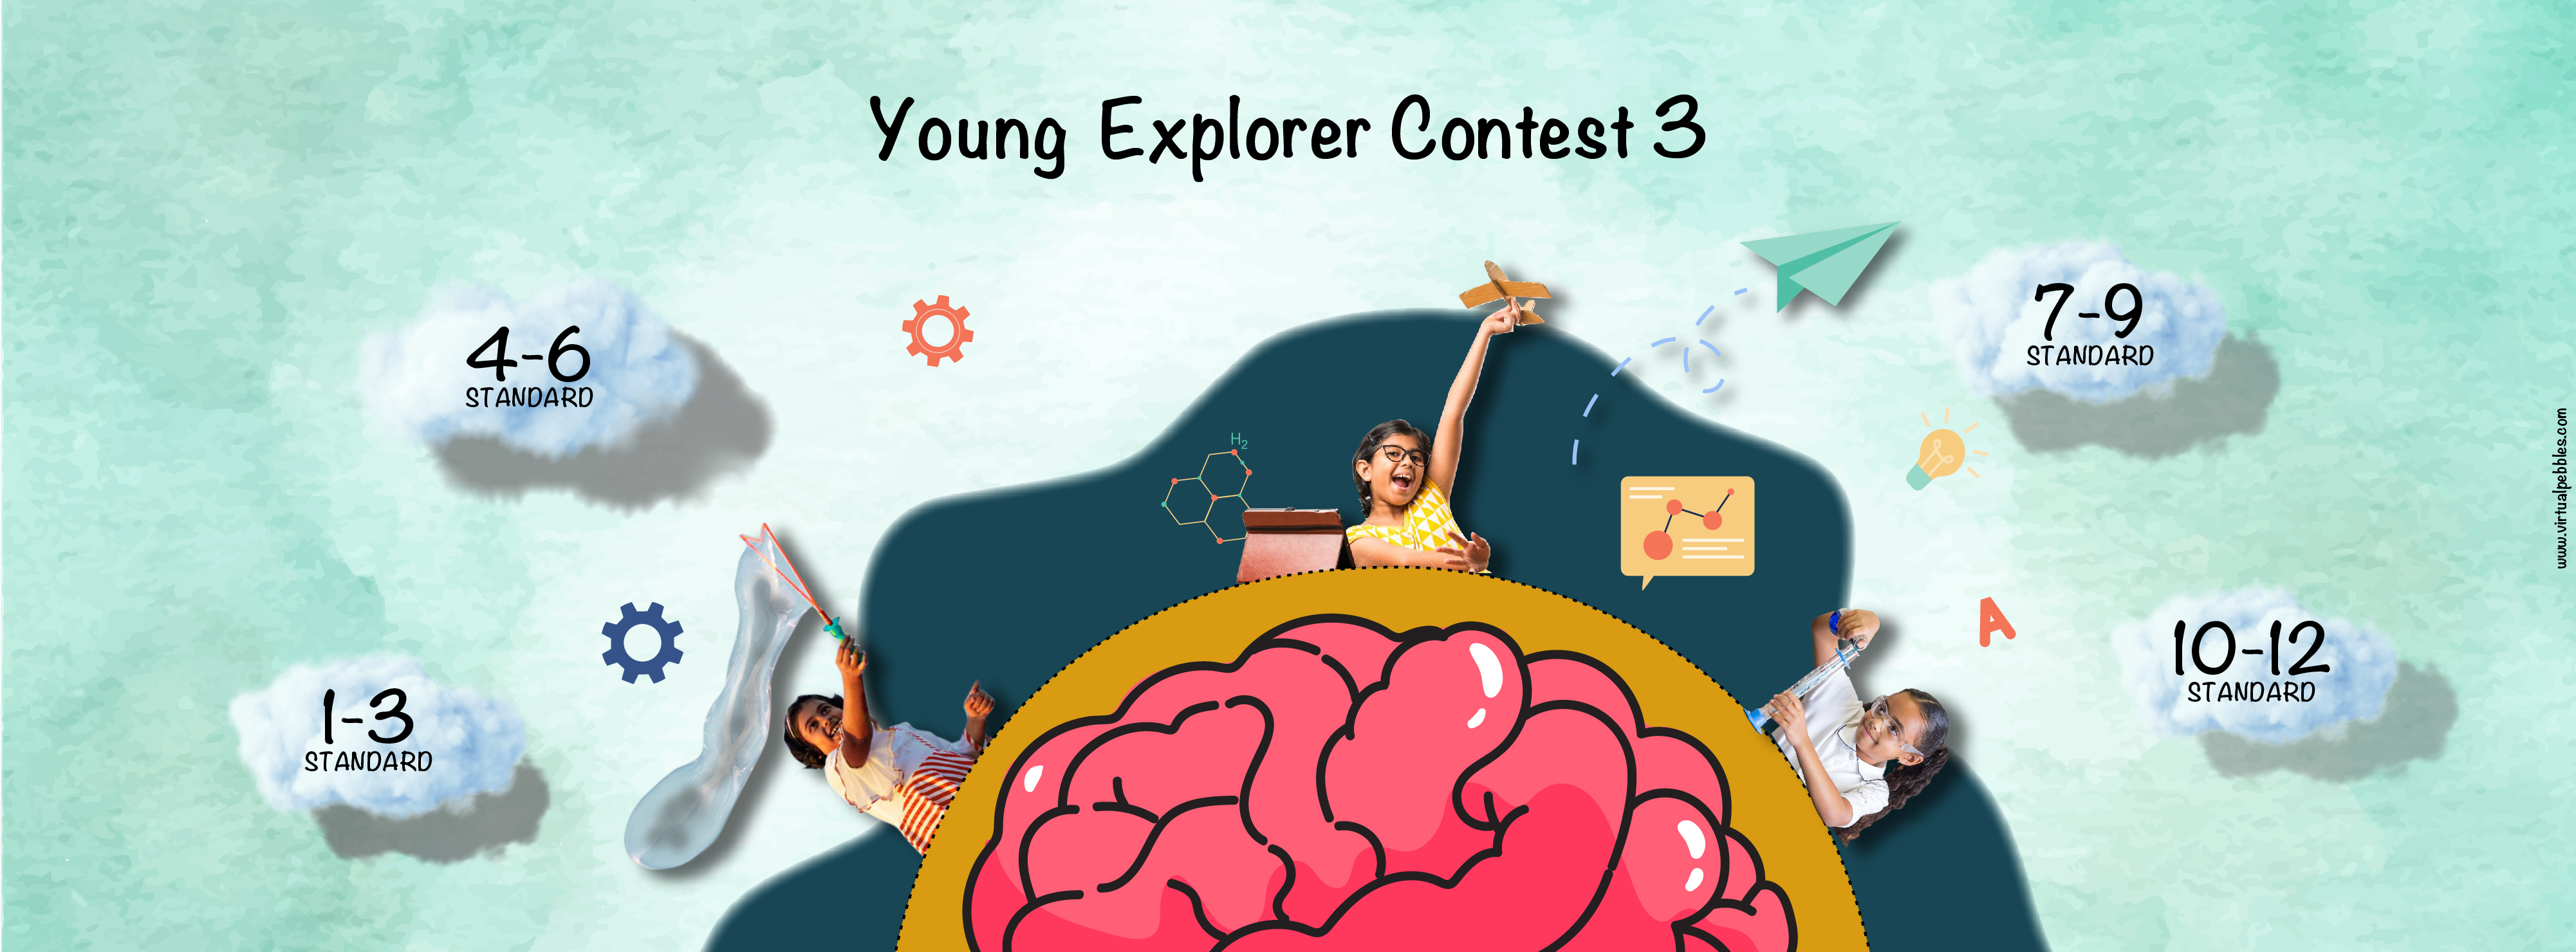 young explorer contest 3